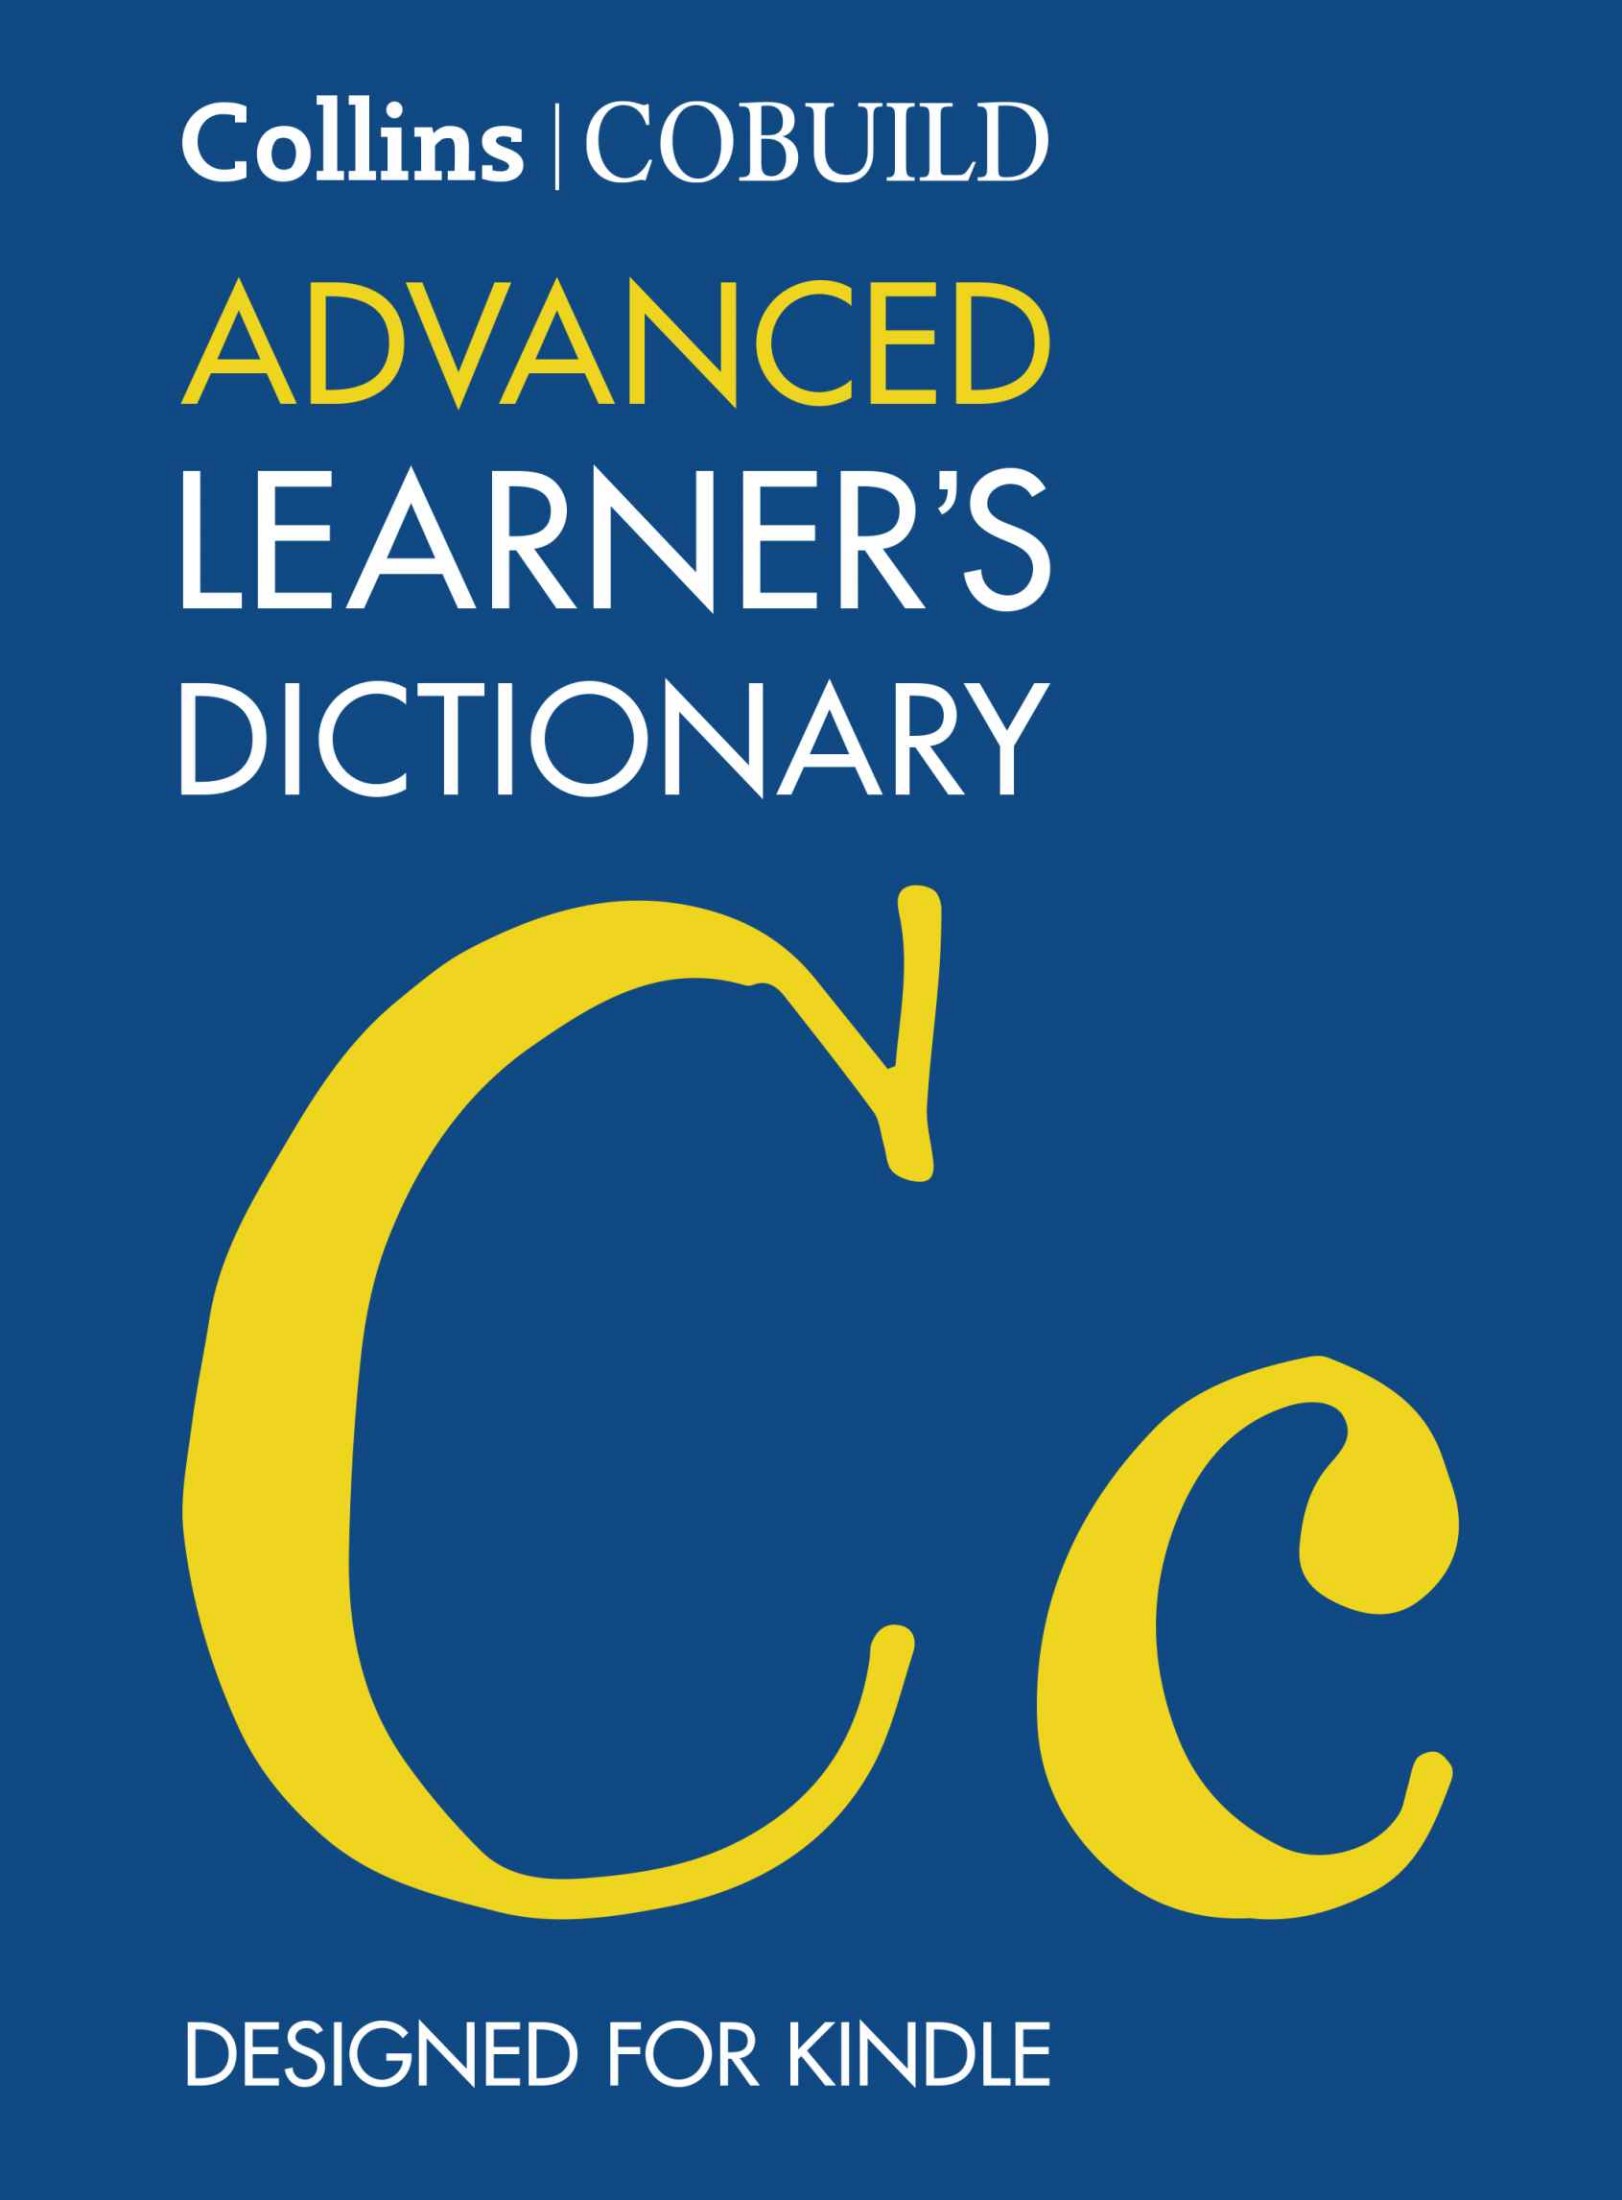 COBUILD Advanced Learner’s Dictionary